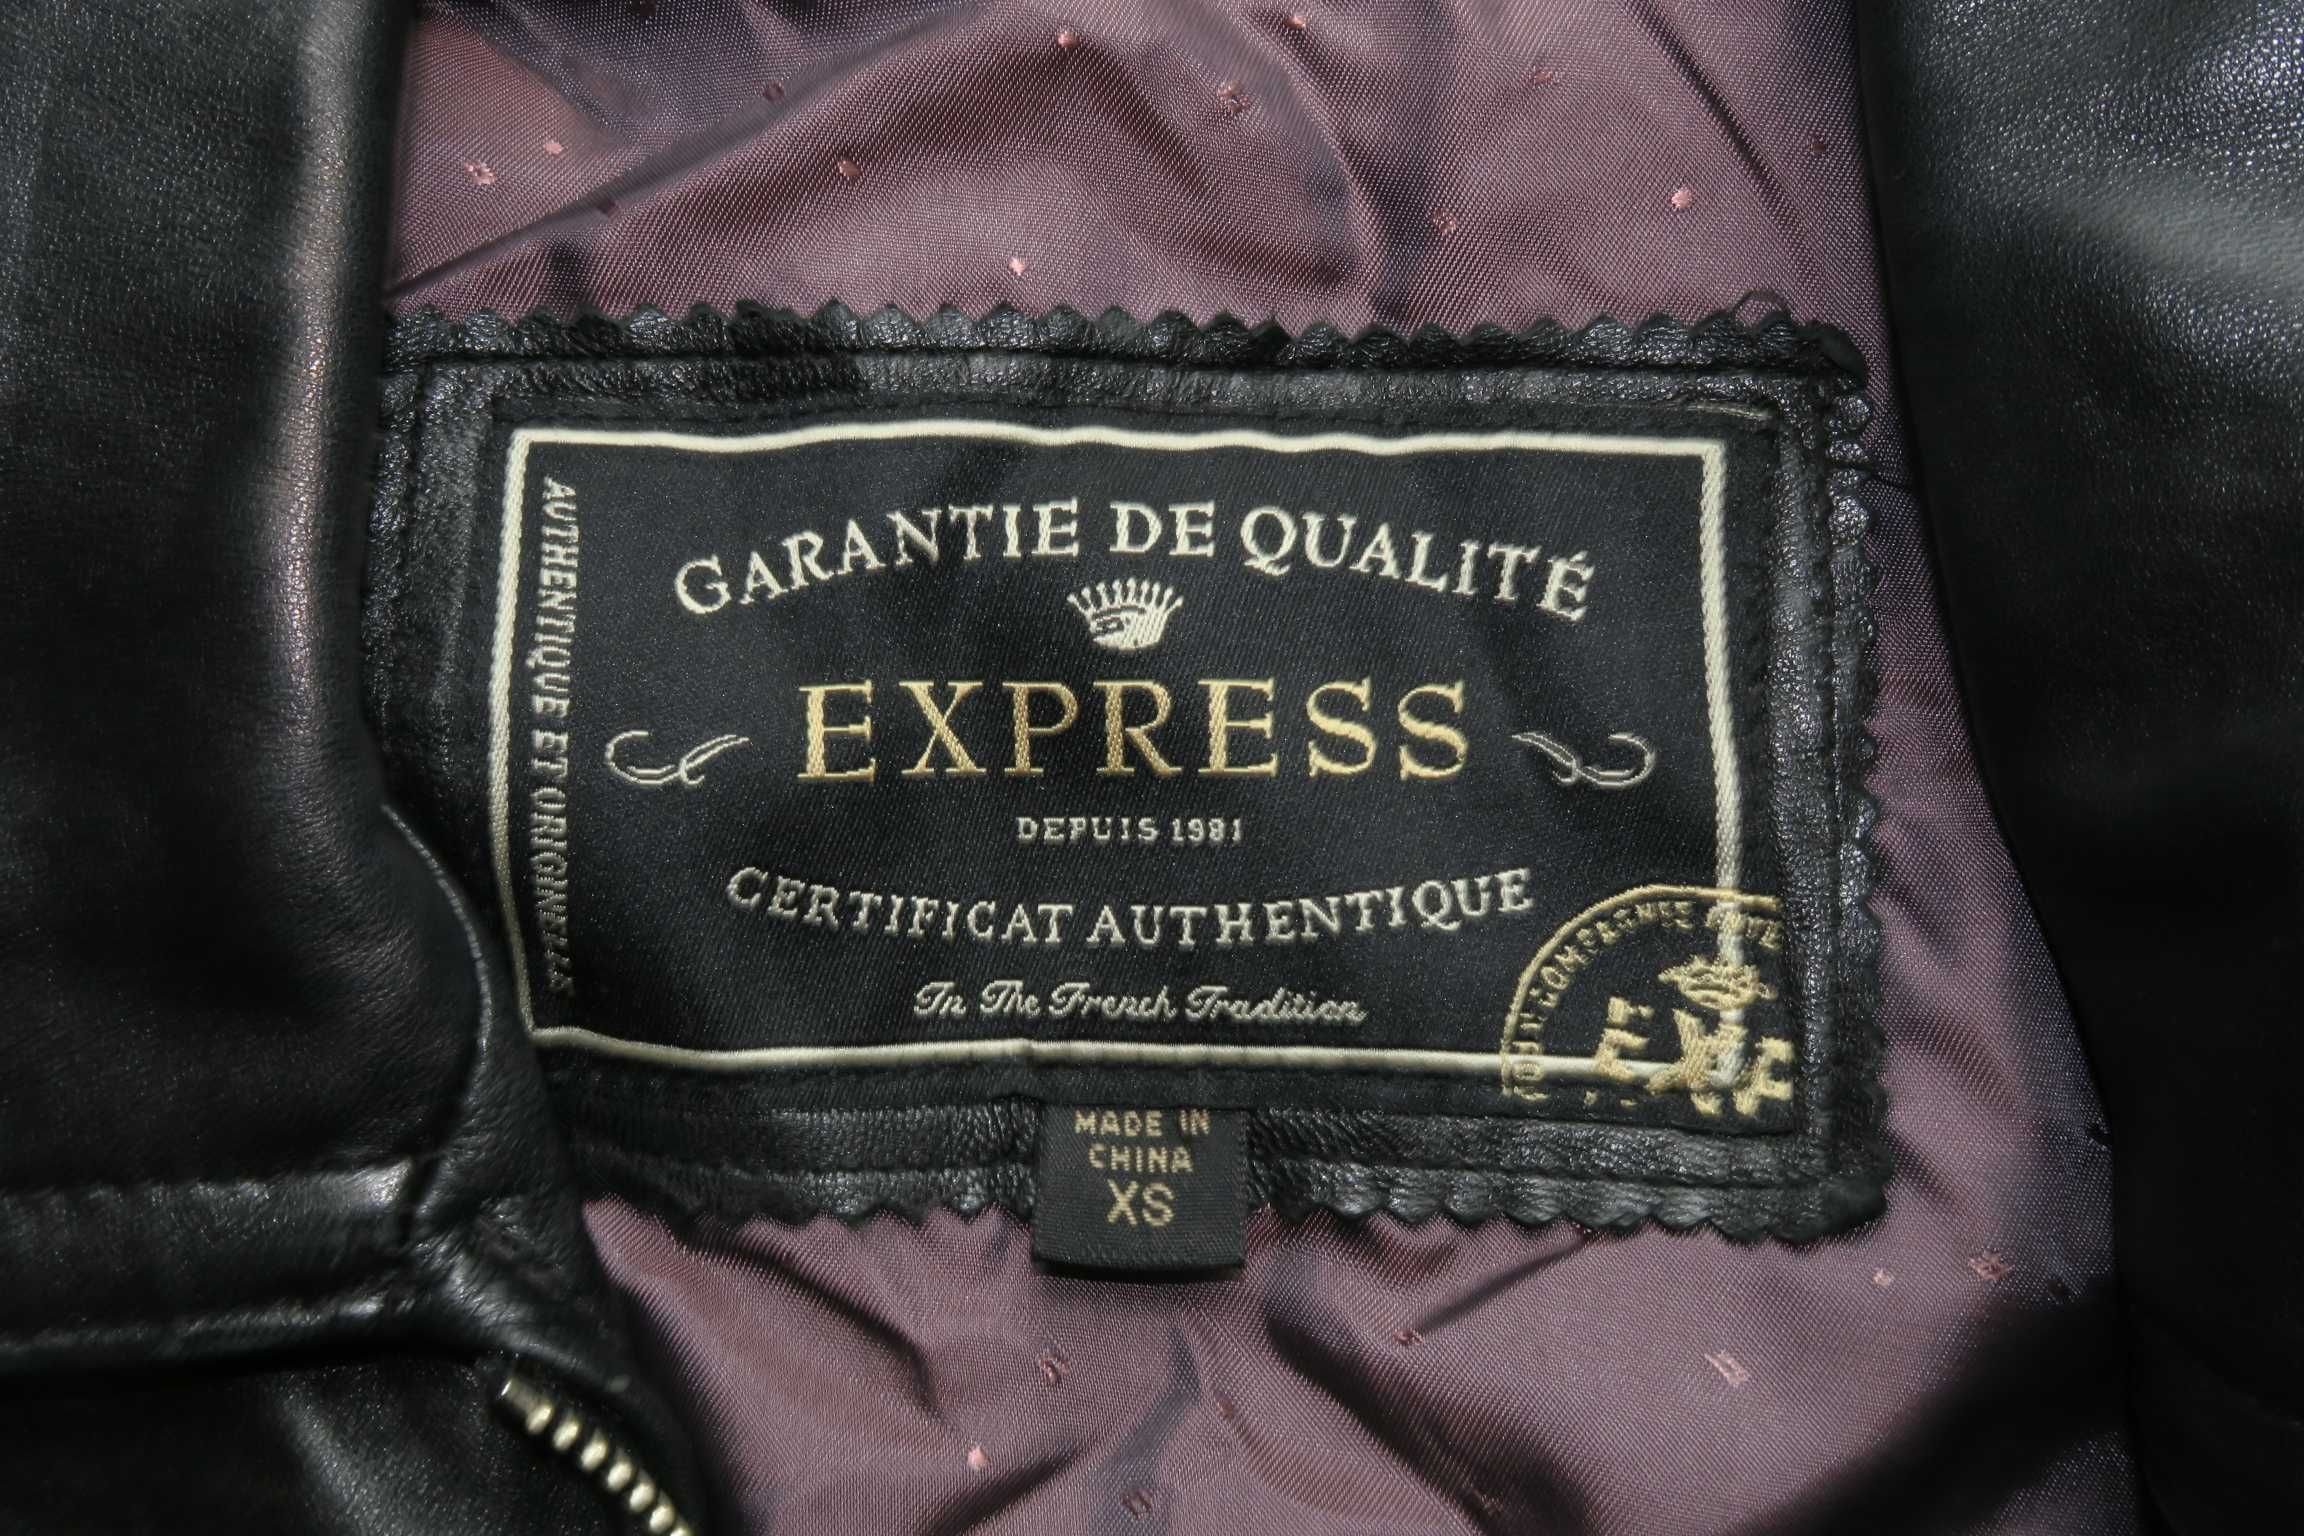 Express kurtka skórzana katana XL